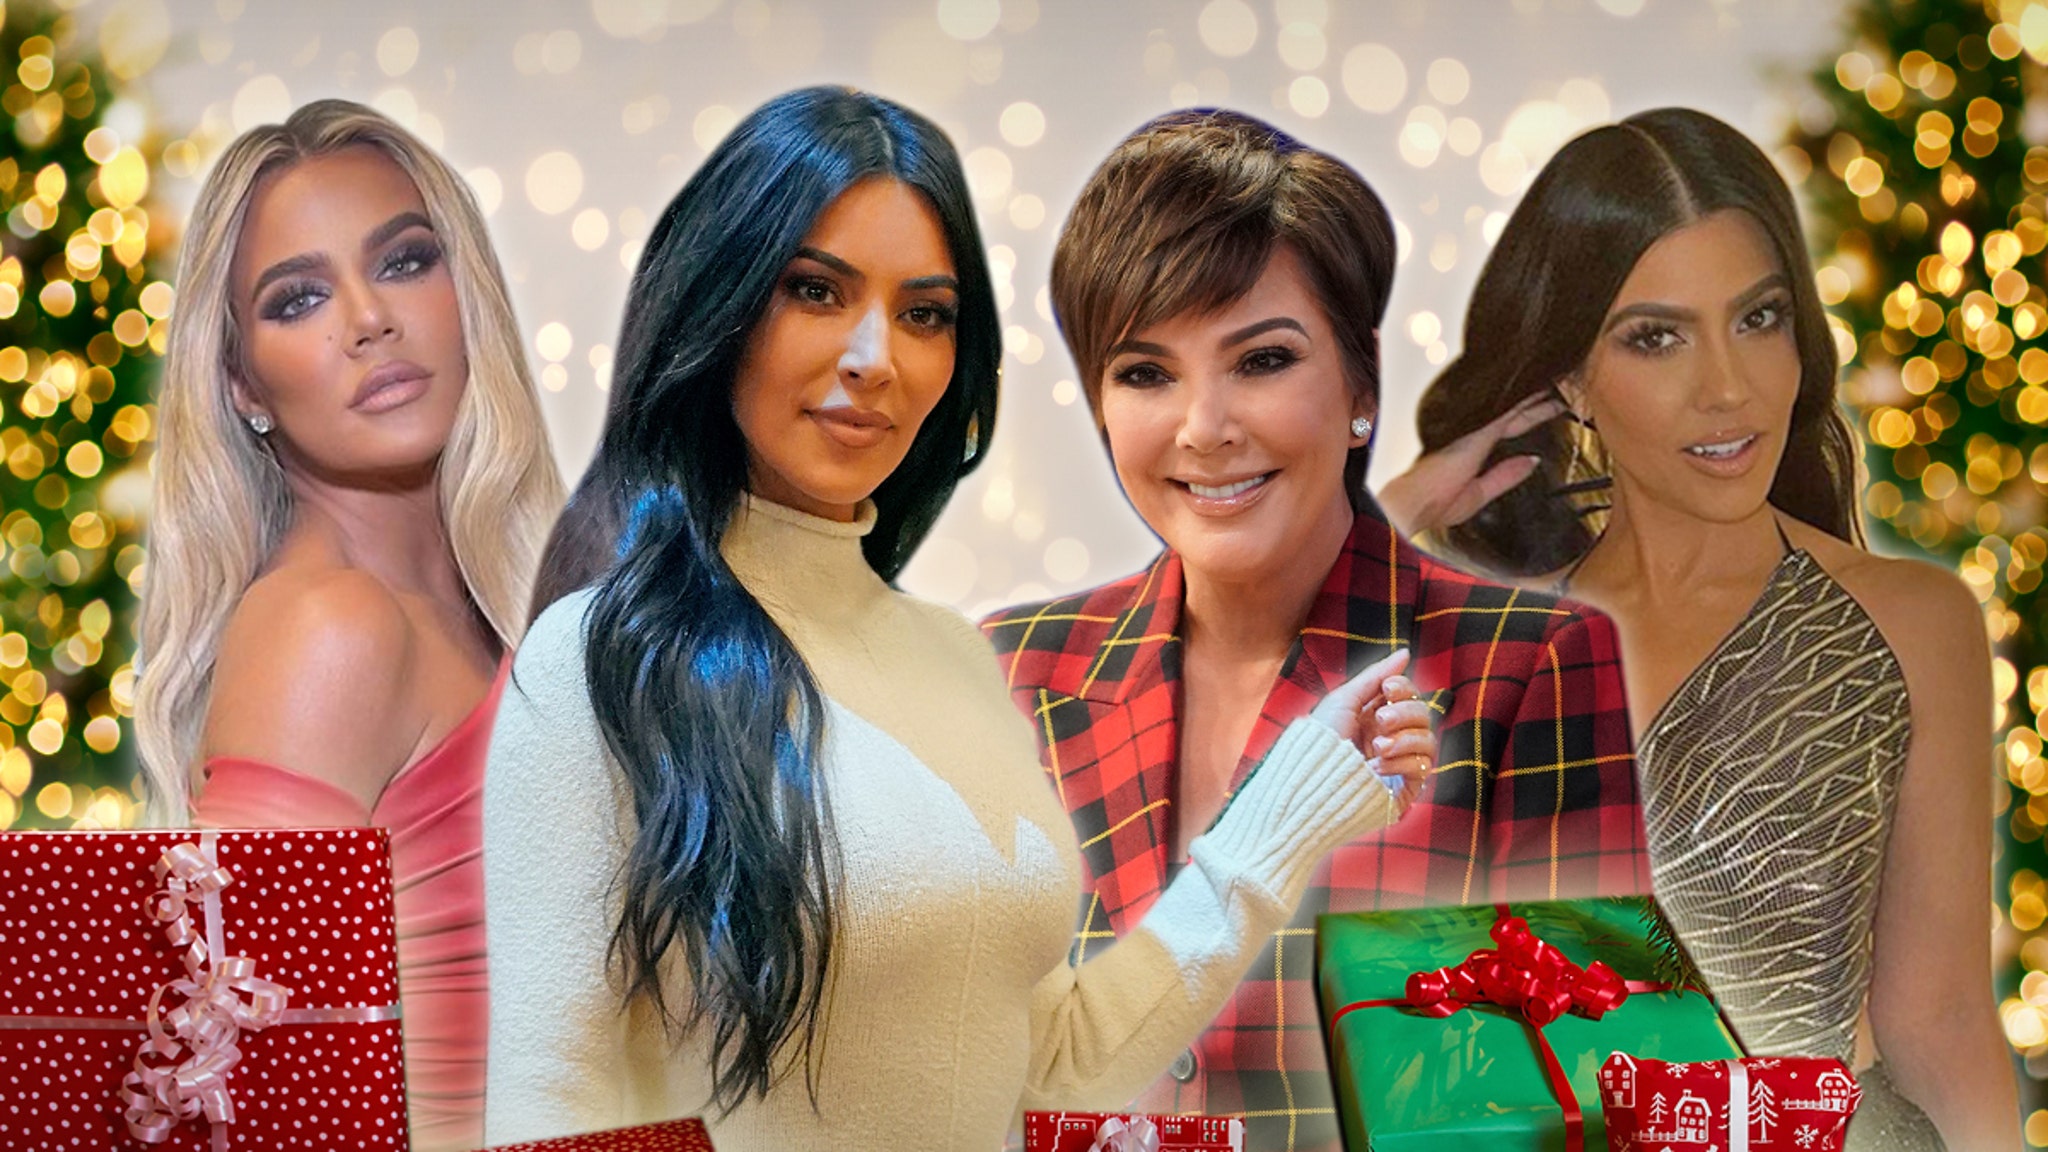 Kardashian Jenner Christmas Eve Party Scaled Back Because of COVID – TMZ